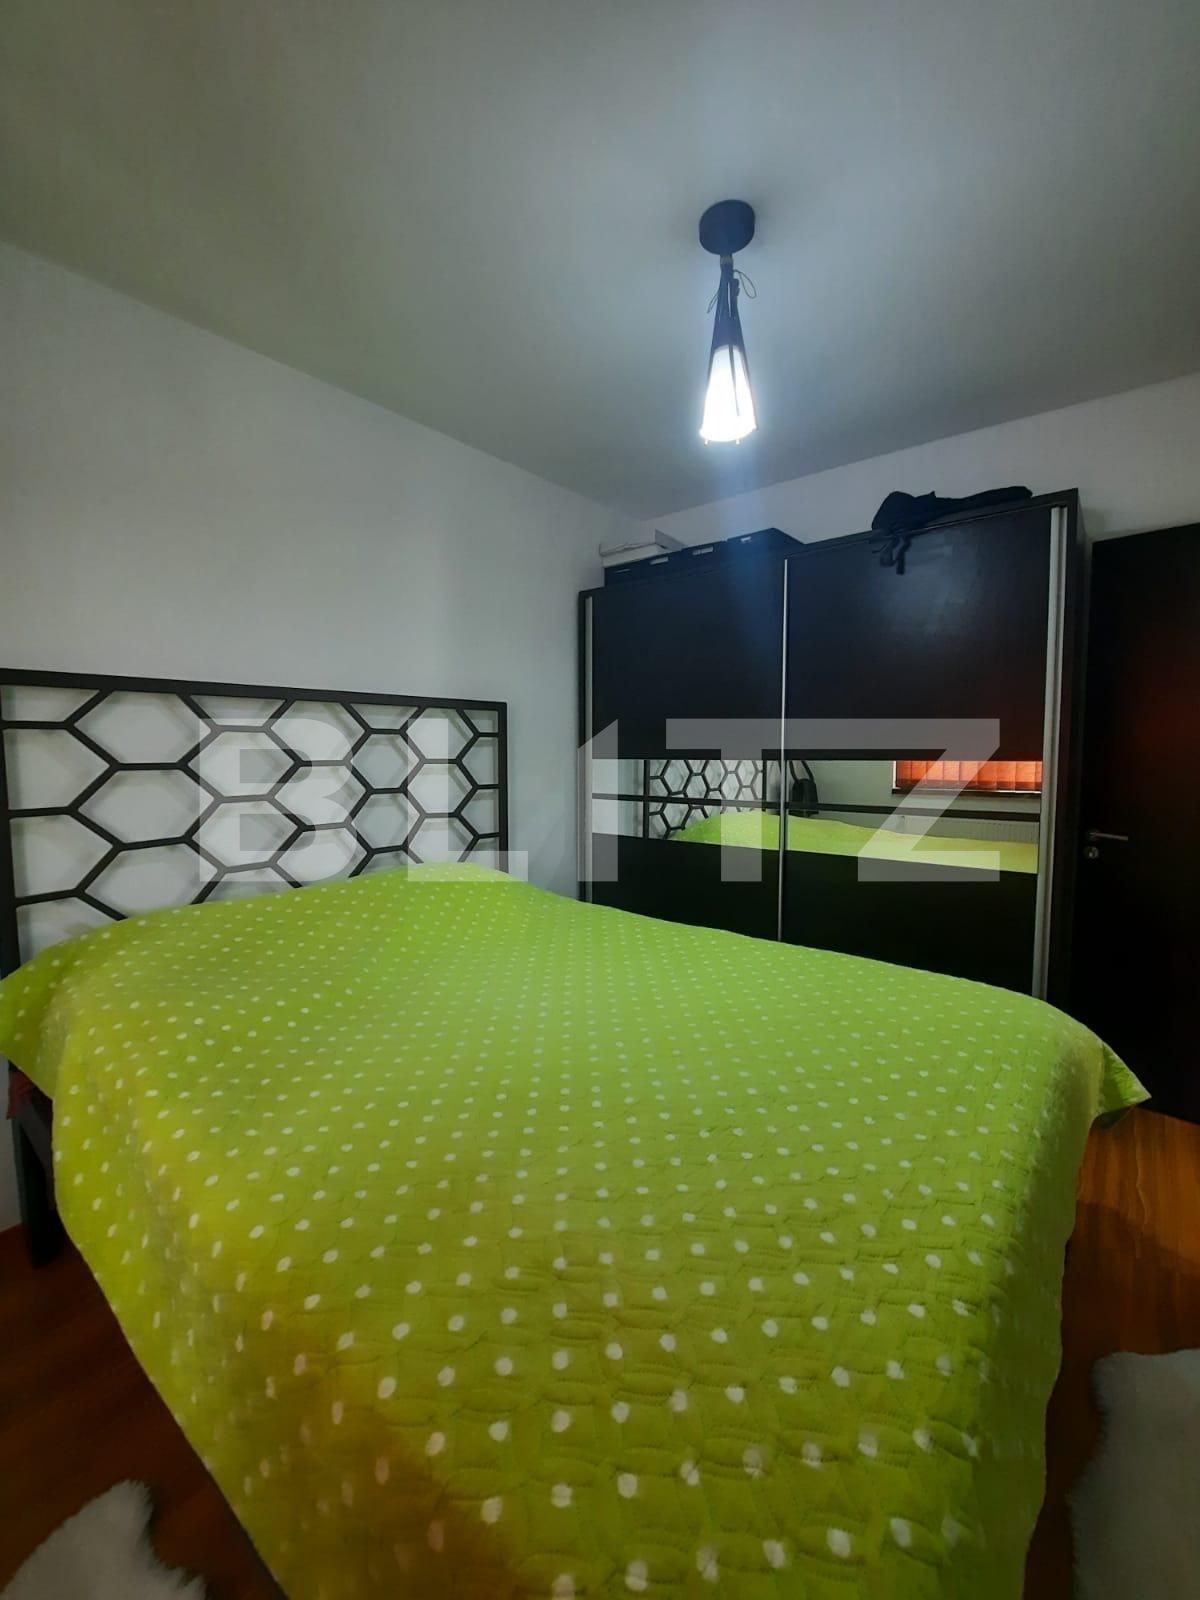 Poza 6 - Apartament cu 2 camere, bloc din 2014, loc de parcare, zona Alexandru